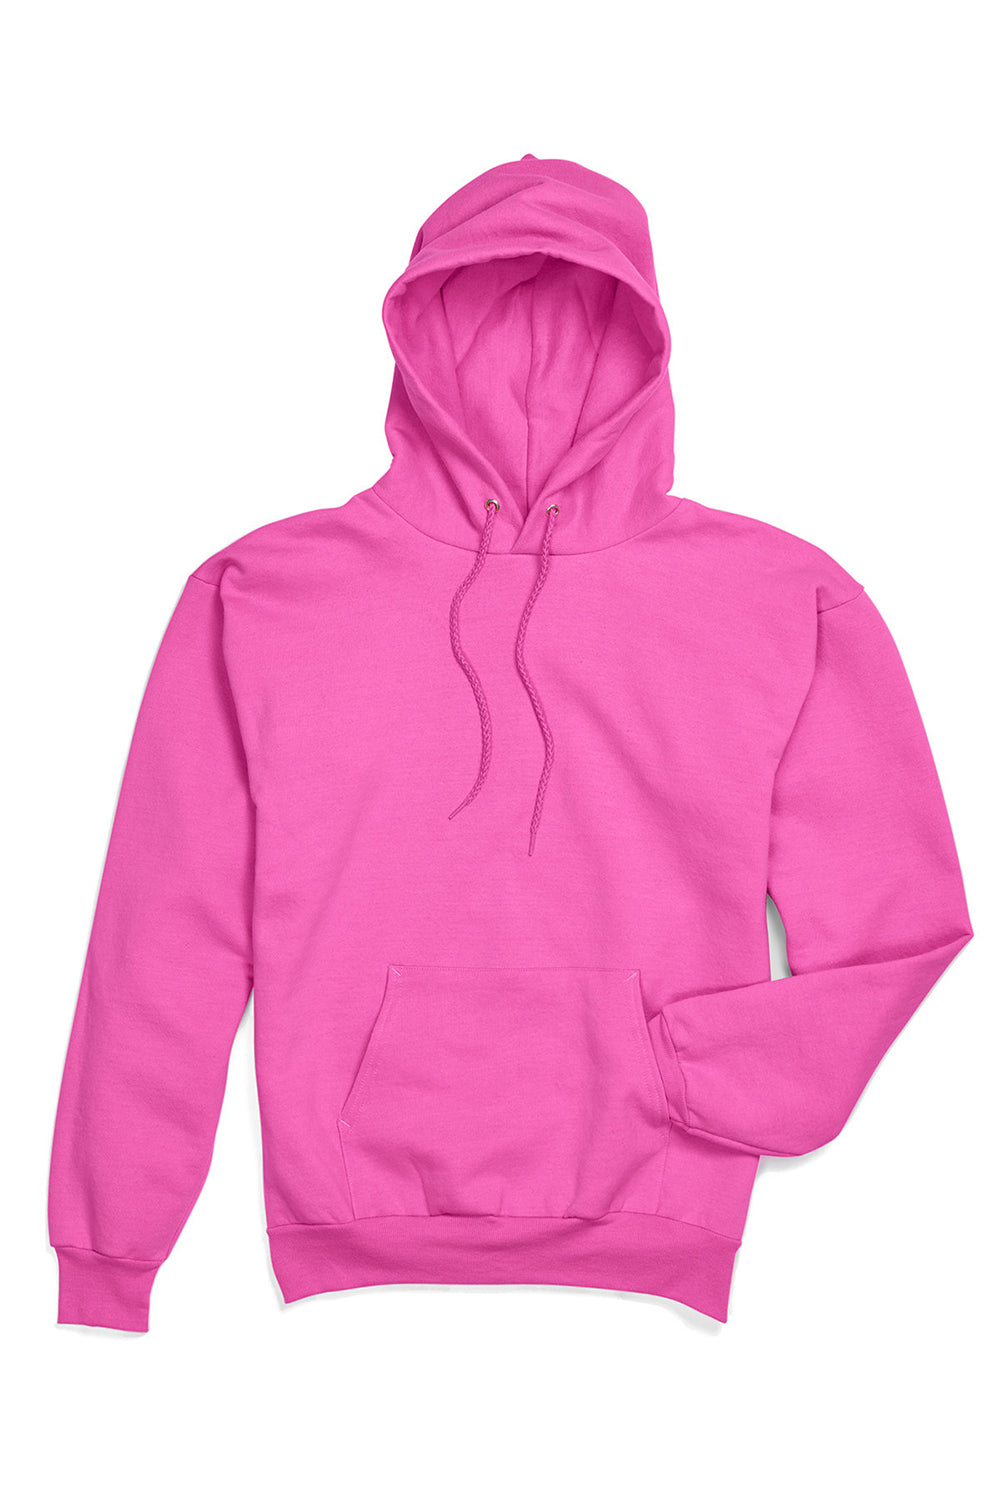 Hanes P170 Mens EcoSmart Print Pro XP Hooded Sweatshirt Hoodie Safety Pink Flat Front